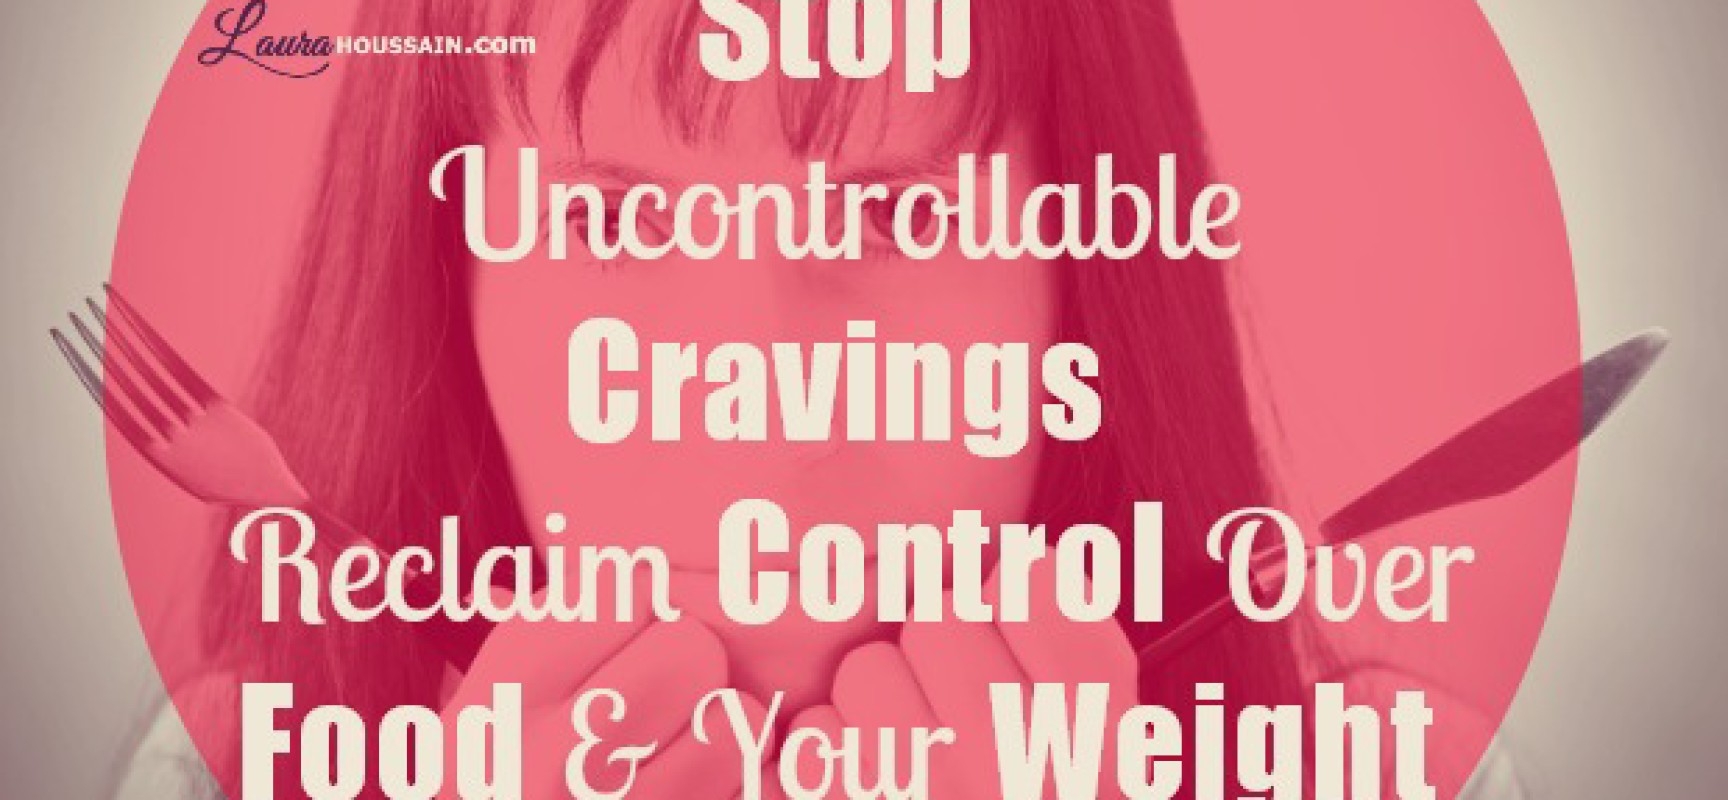 Food Cravings: Reclaim your control